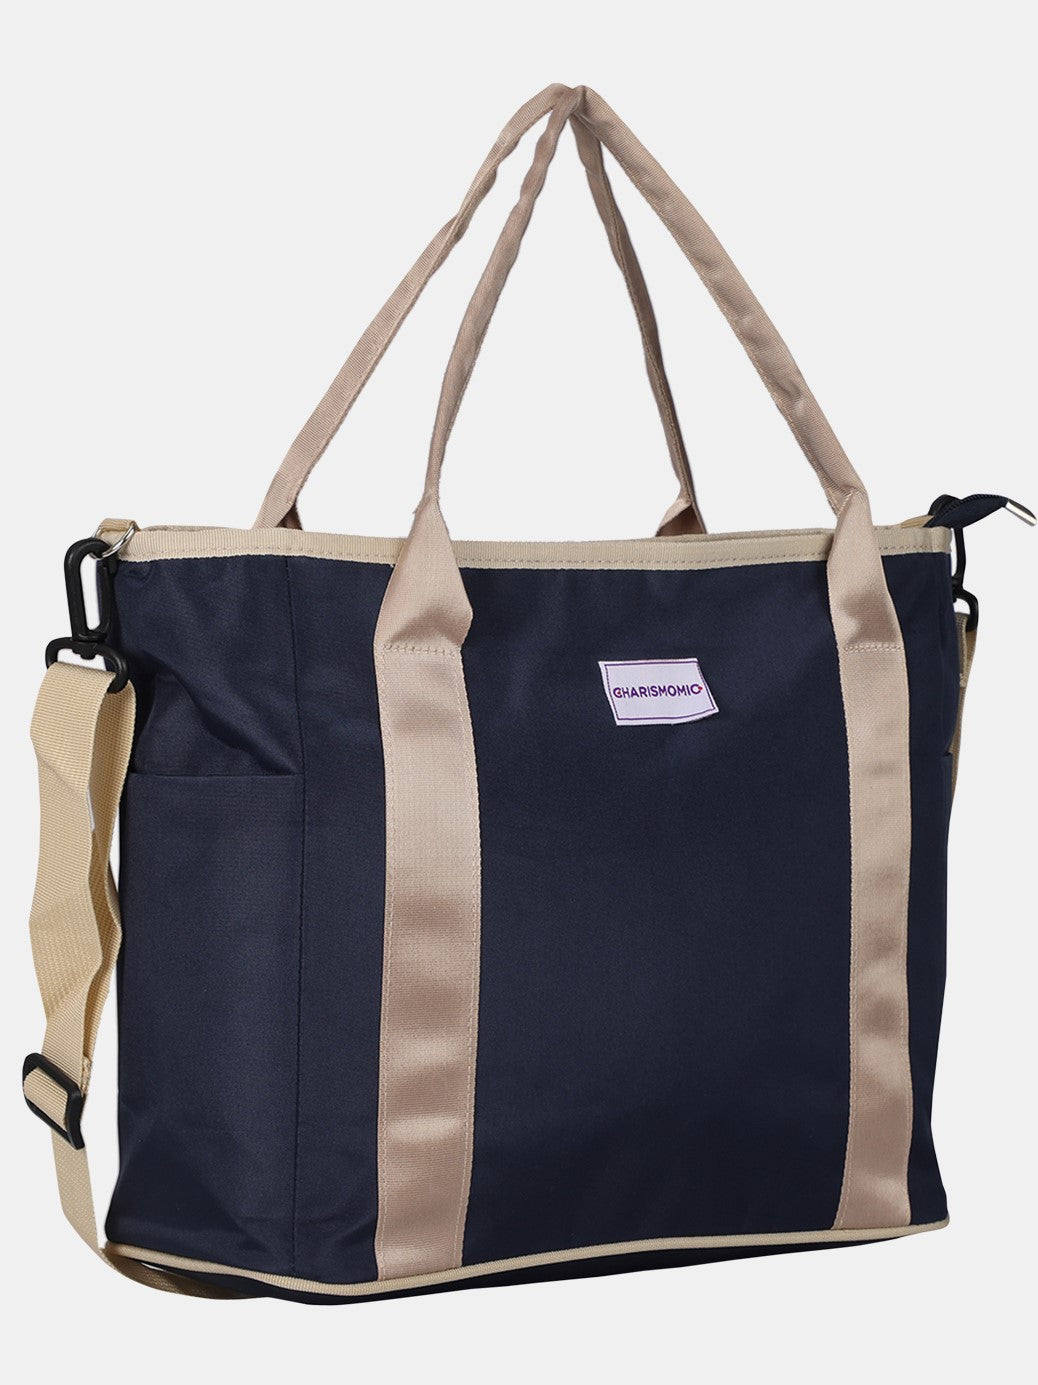 Fast Fashion Essential Diaper Tote Bag